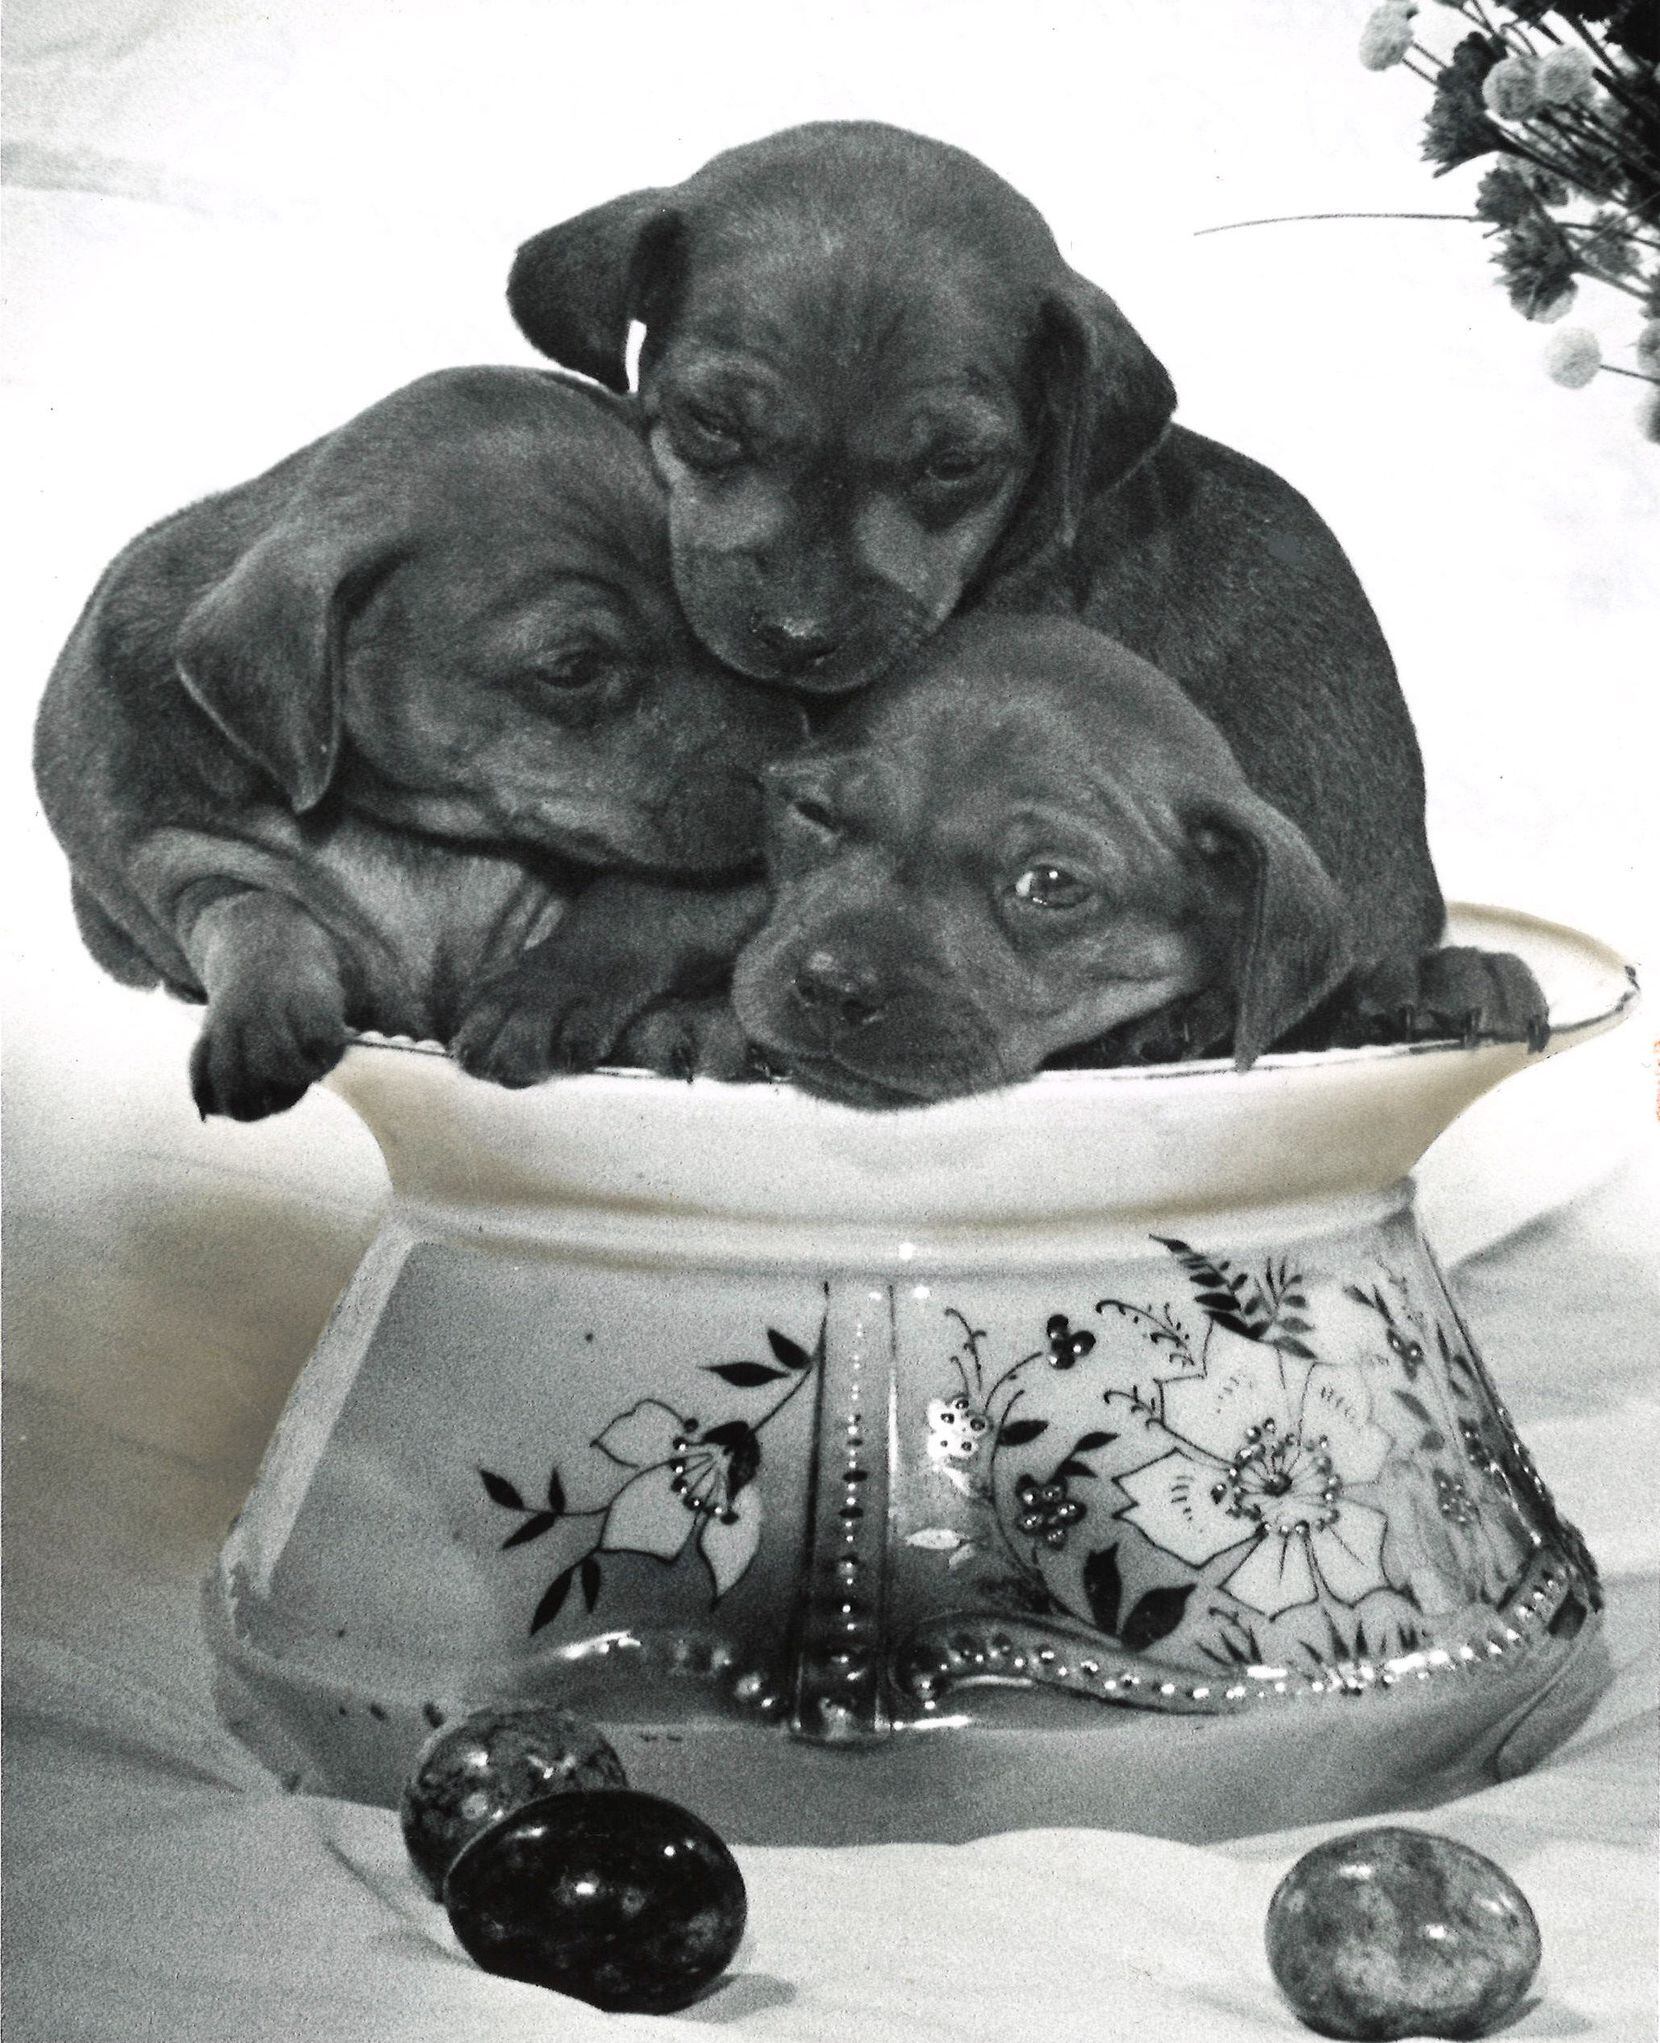 4-week-old miniature Pinscher puppies in 1975.